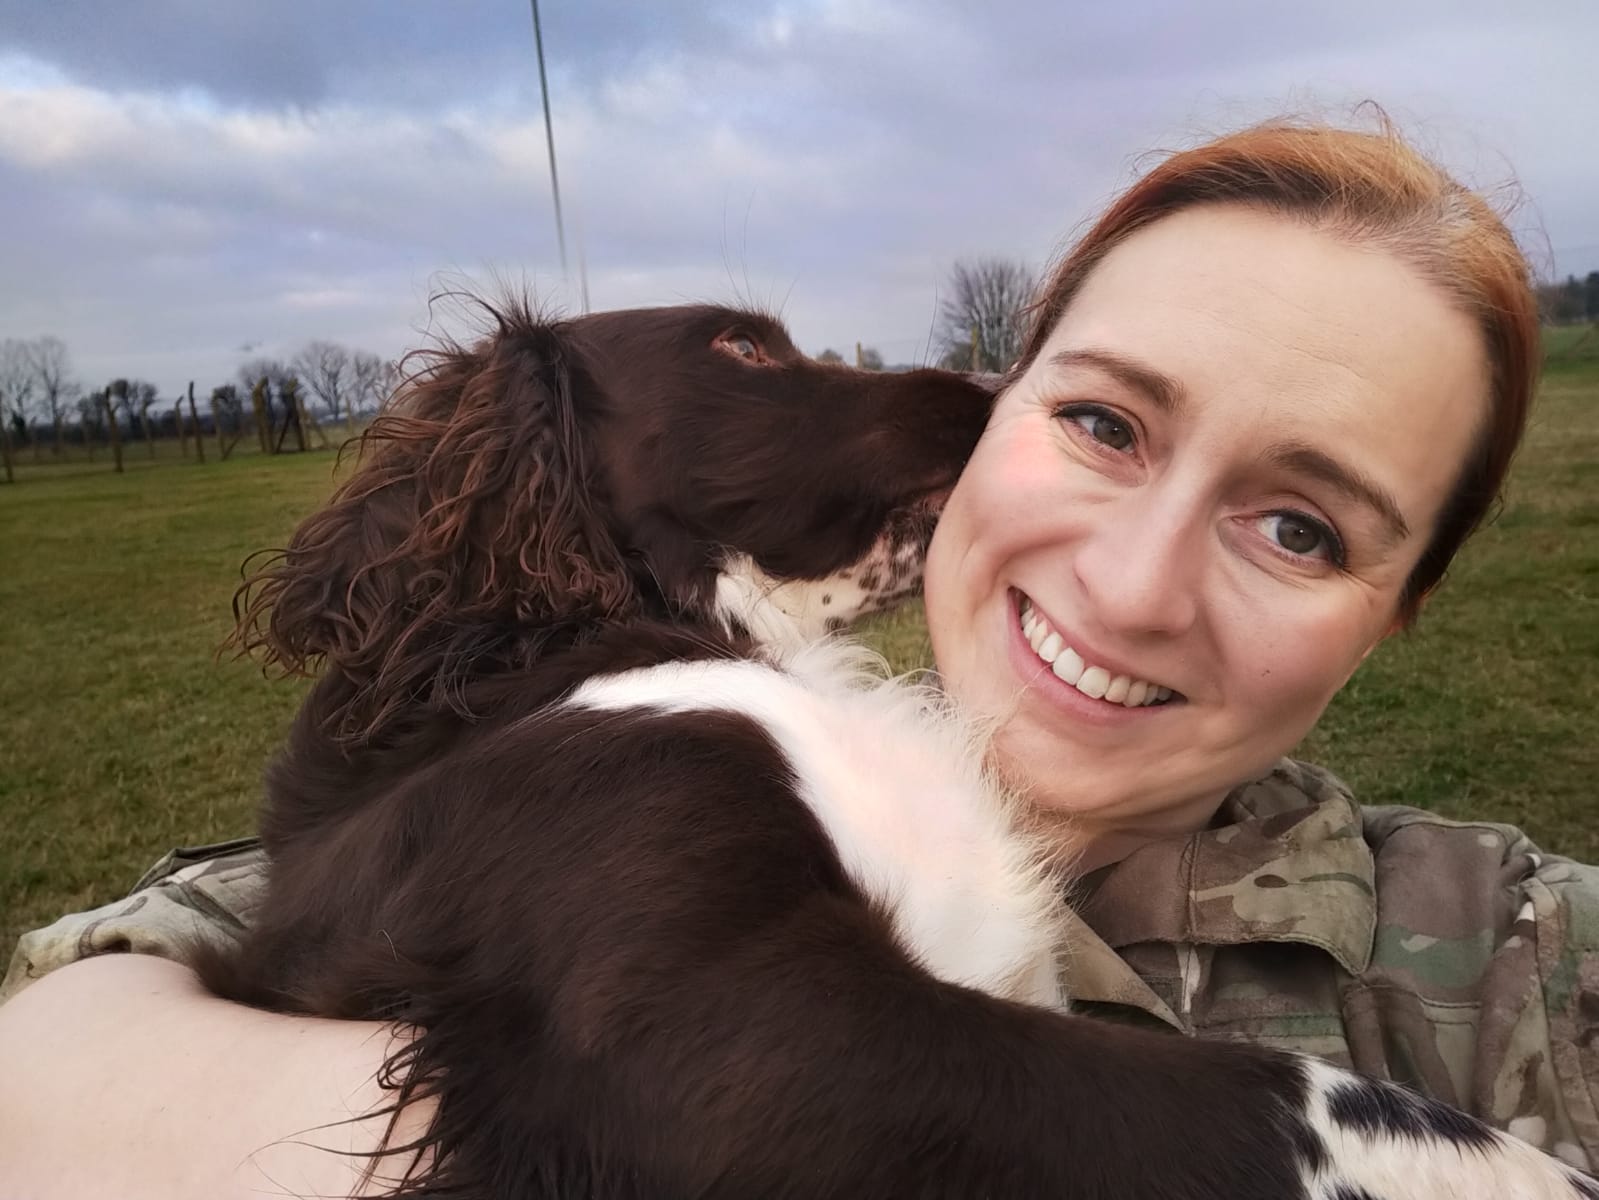 RAF Dog Handler cuddles dog, who licks her ear.